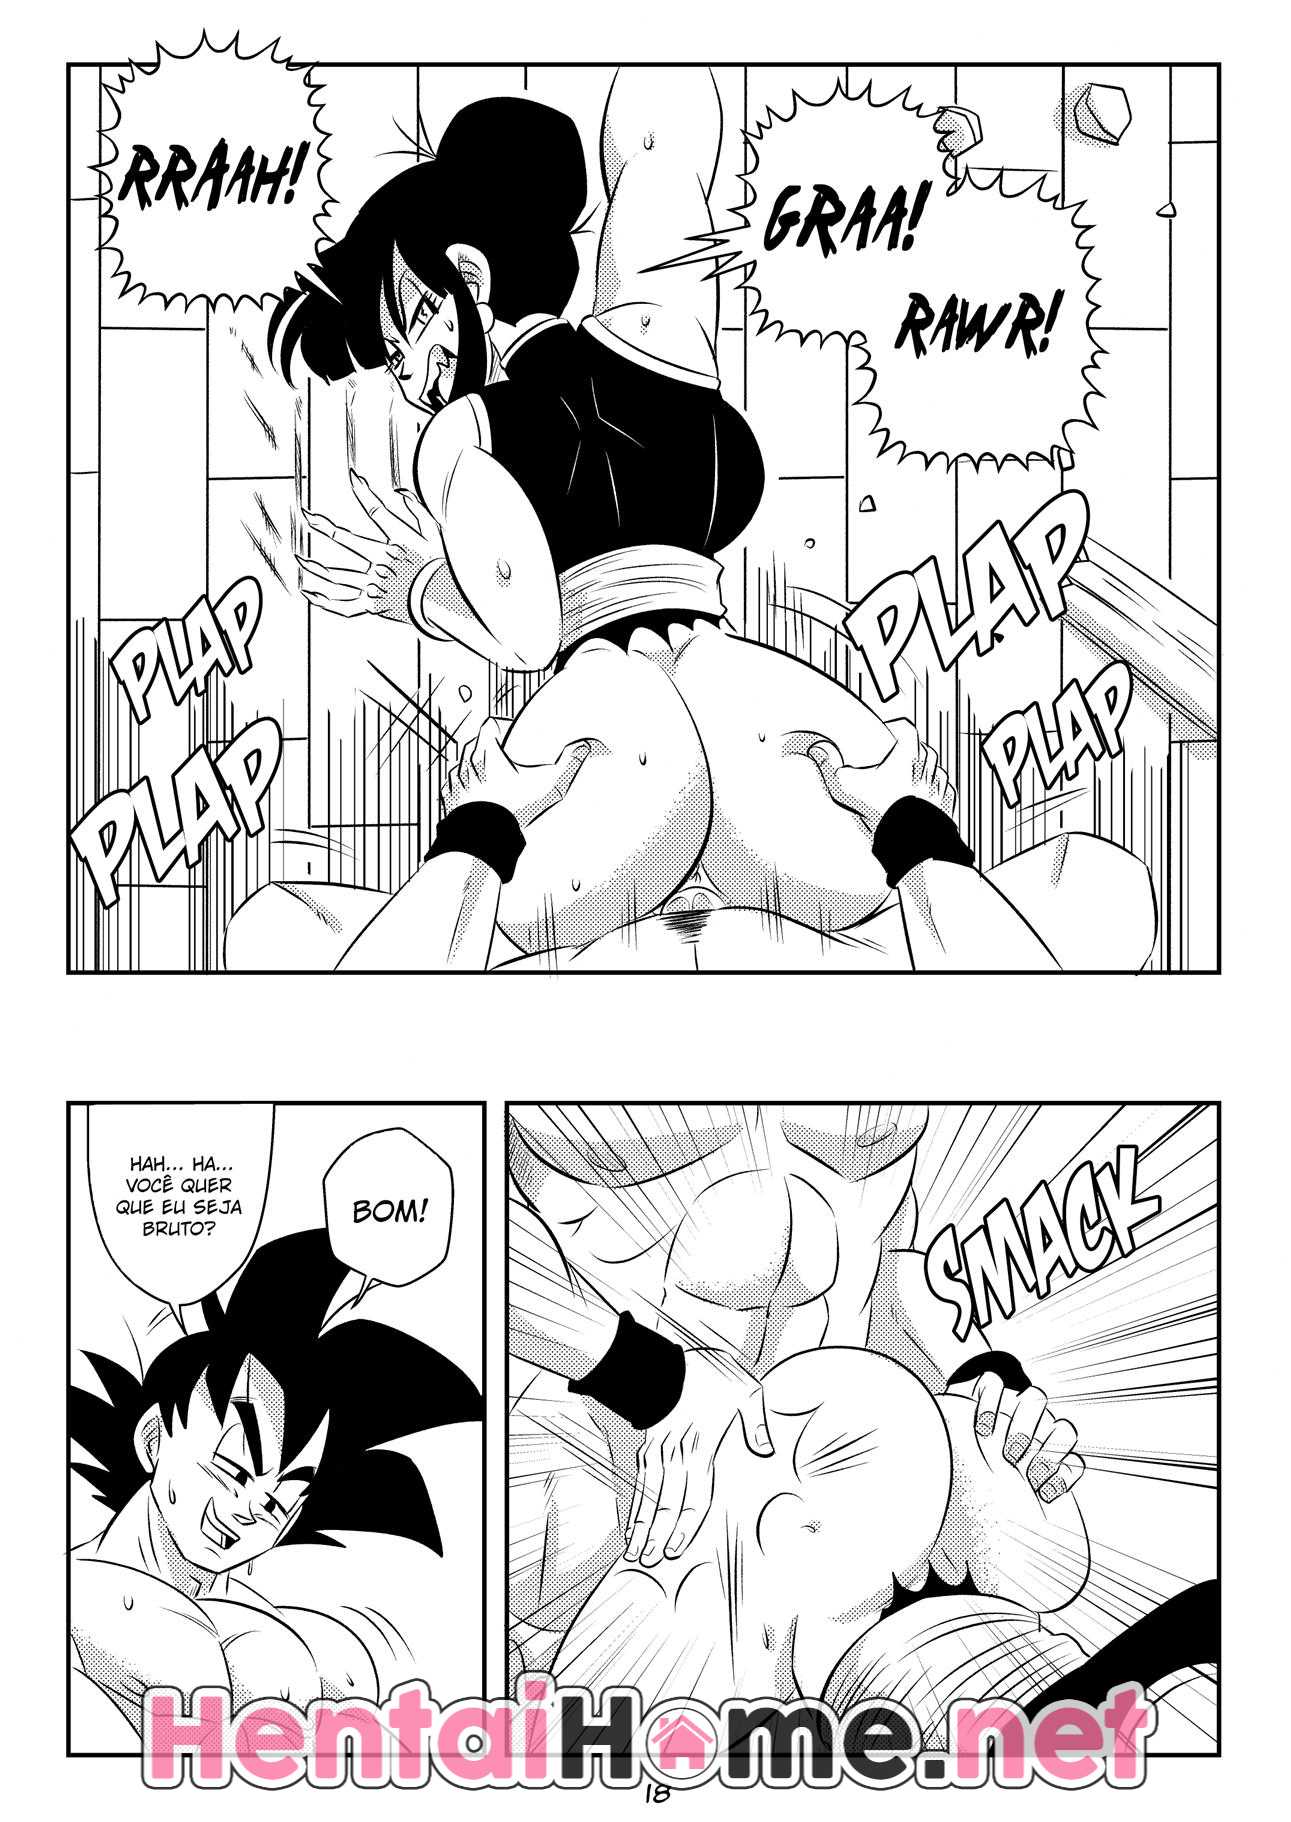 Goku acalma Chi Chi com sexo